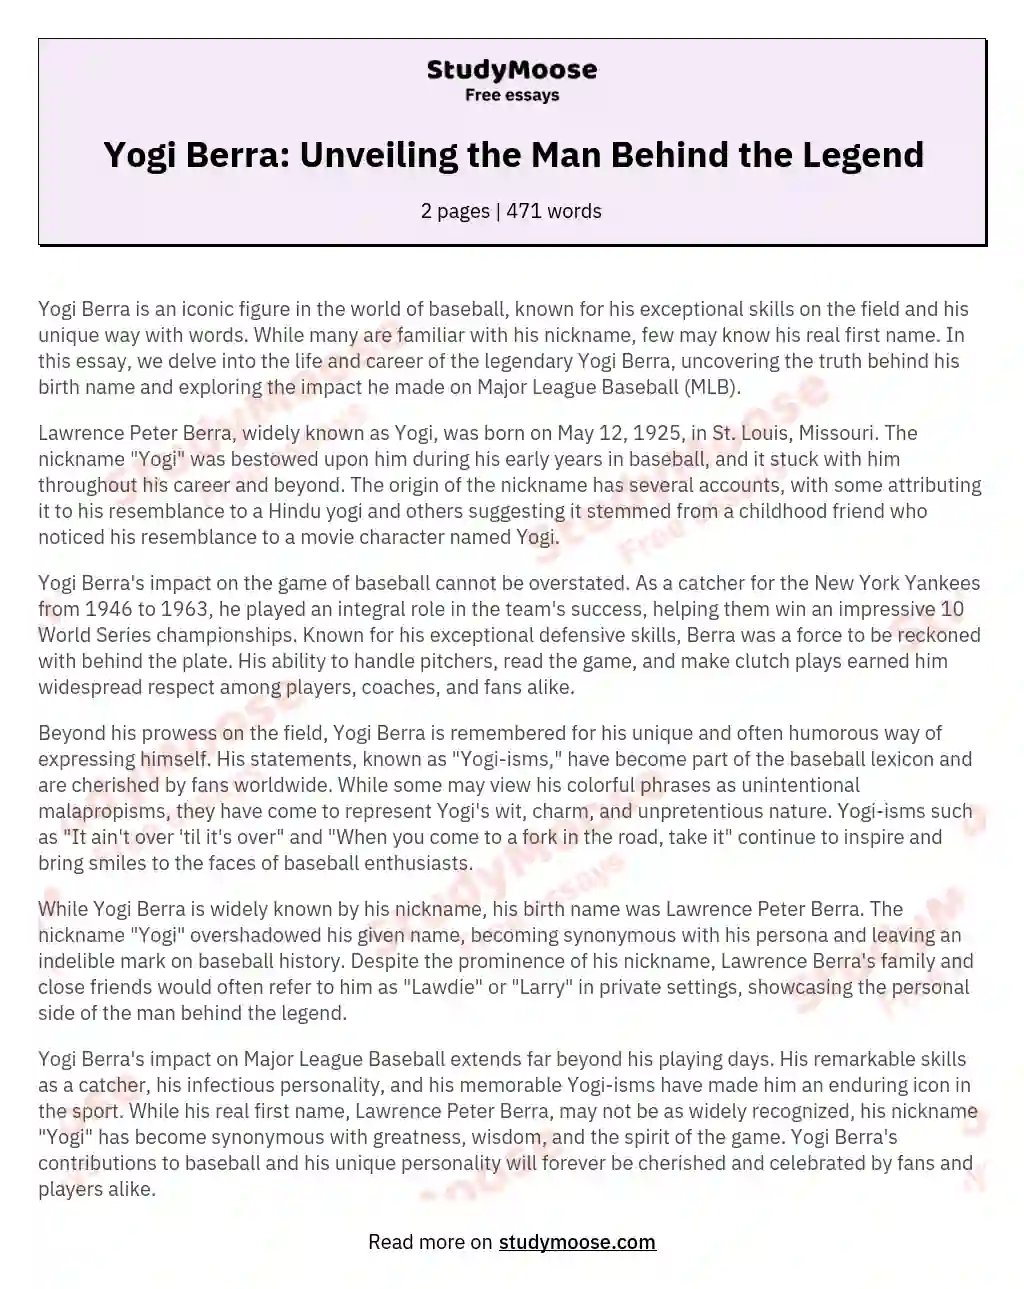 Yogi Berra: Unveiling the Man Behind the Legend essay